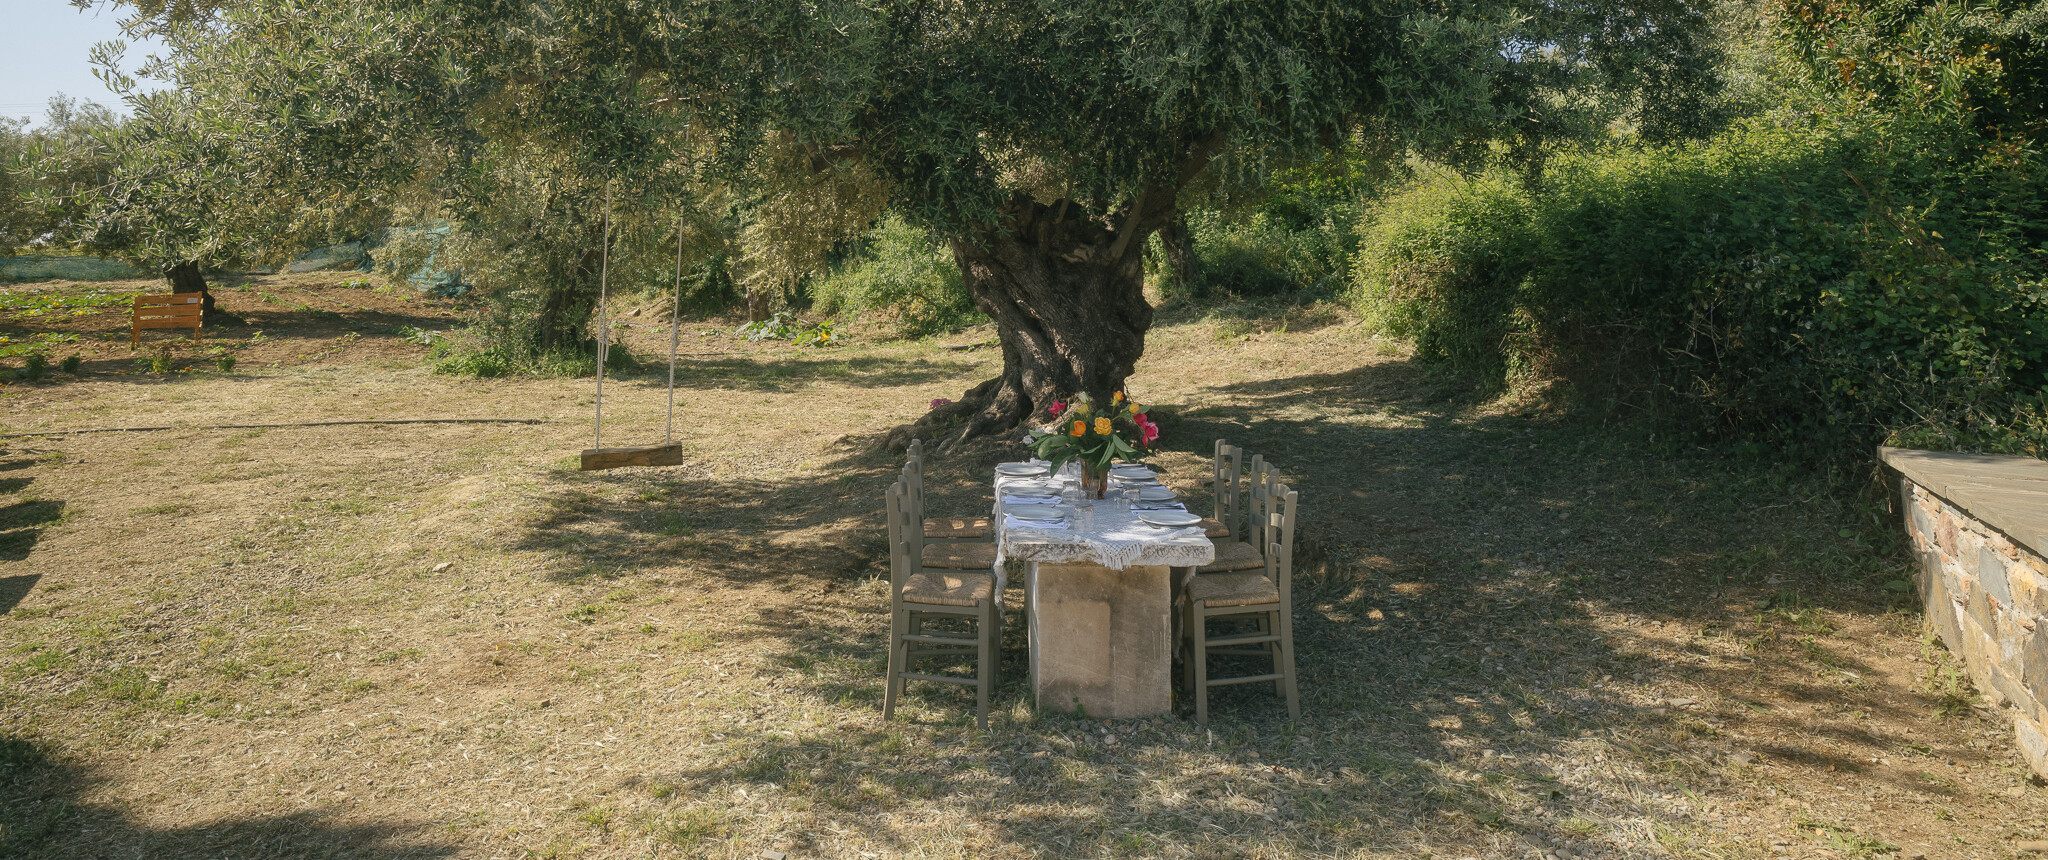 Century old olive tree